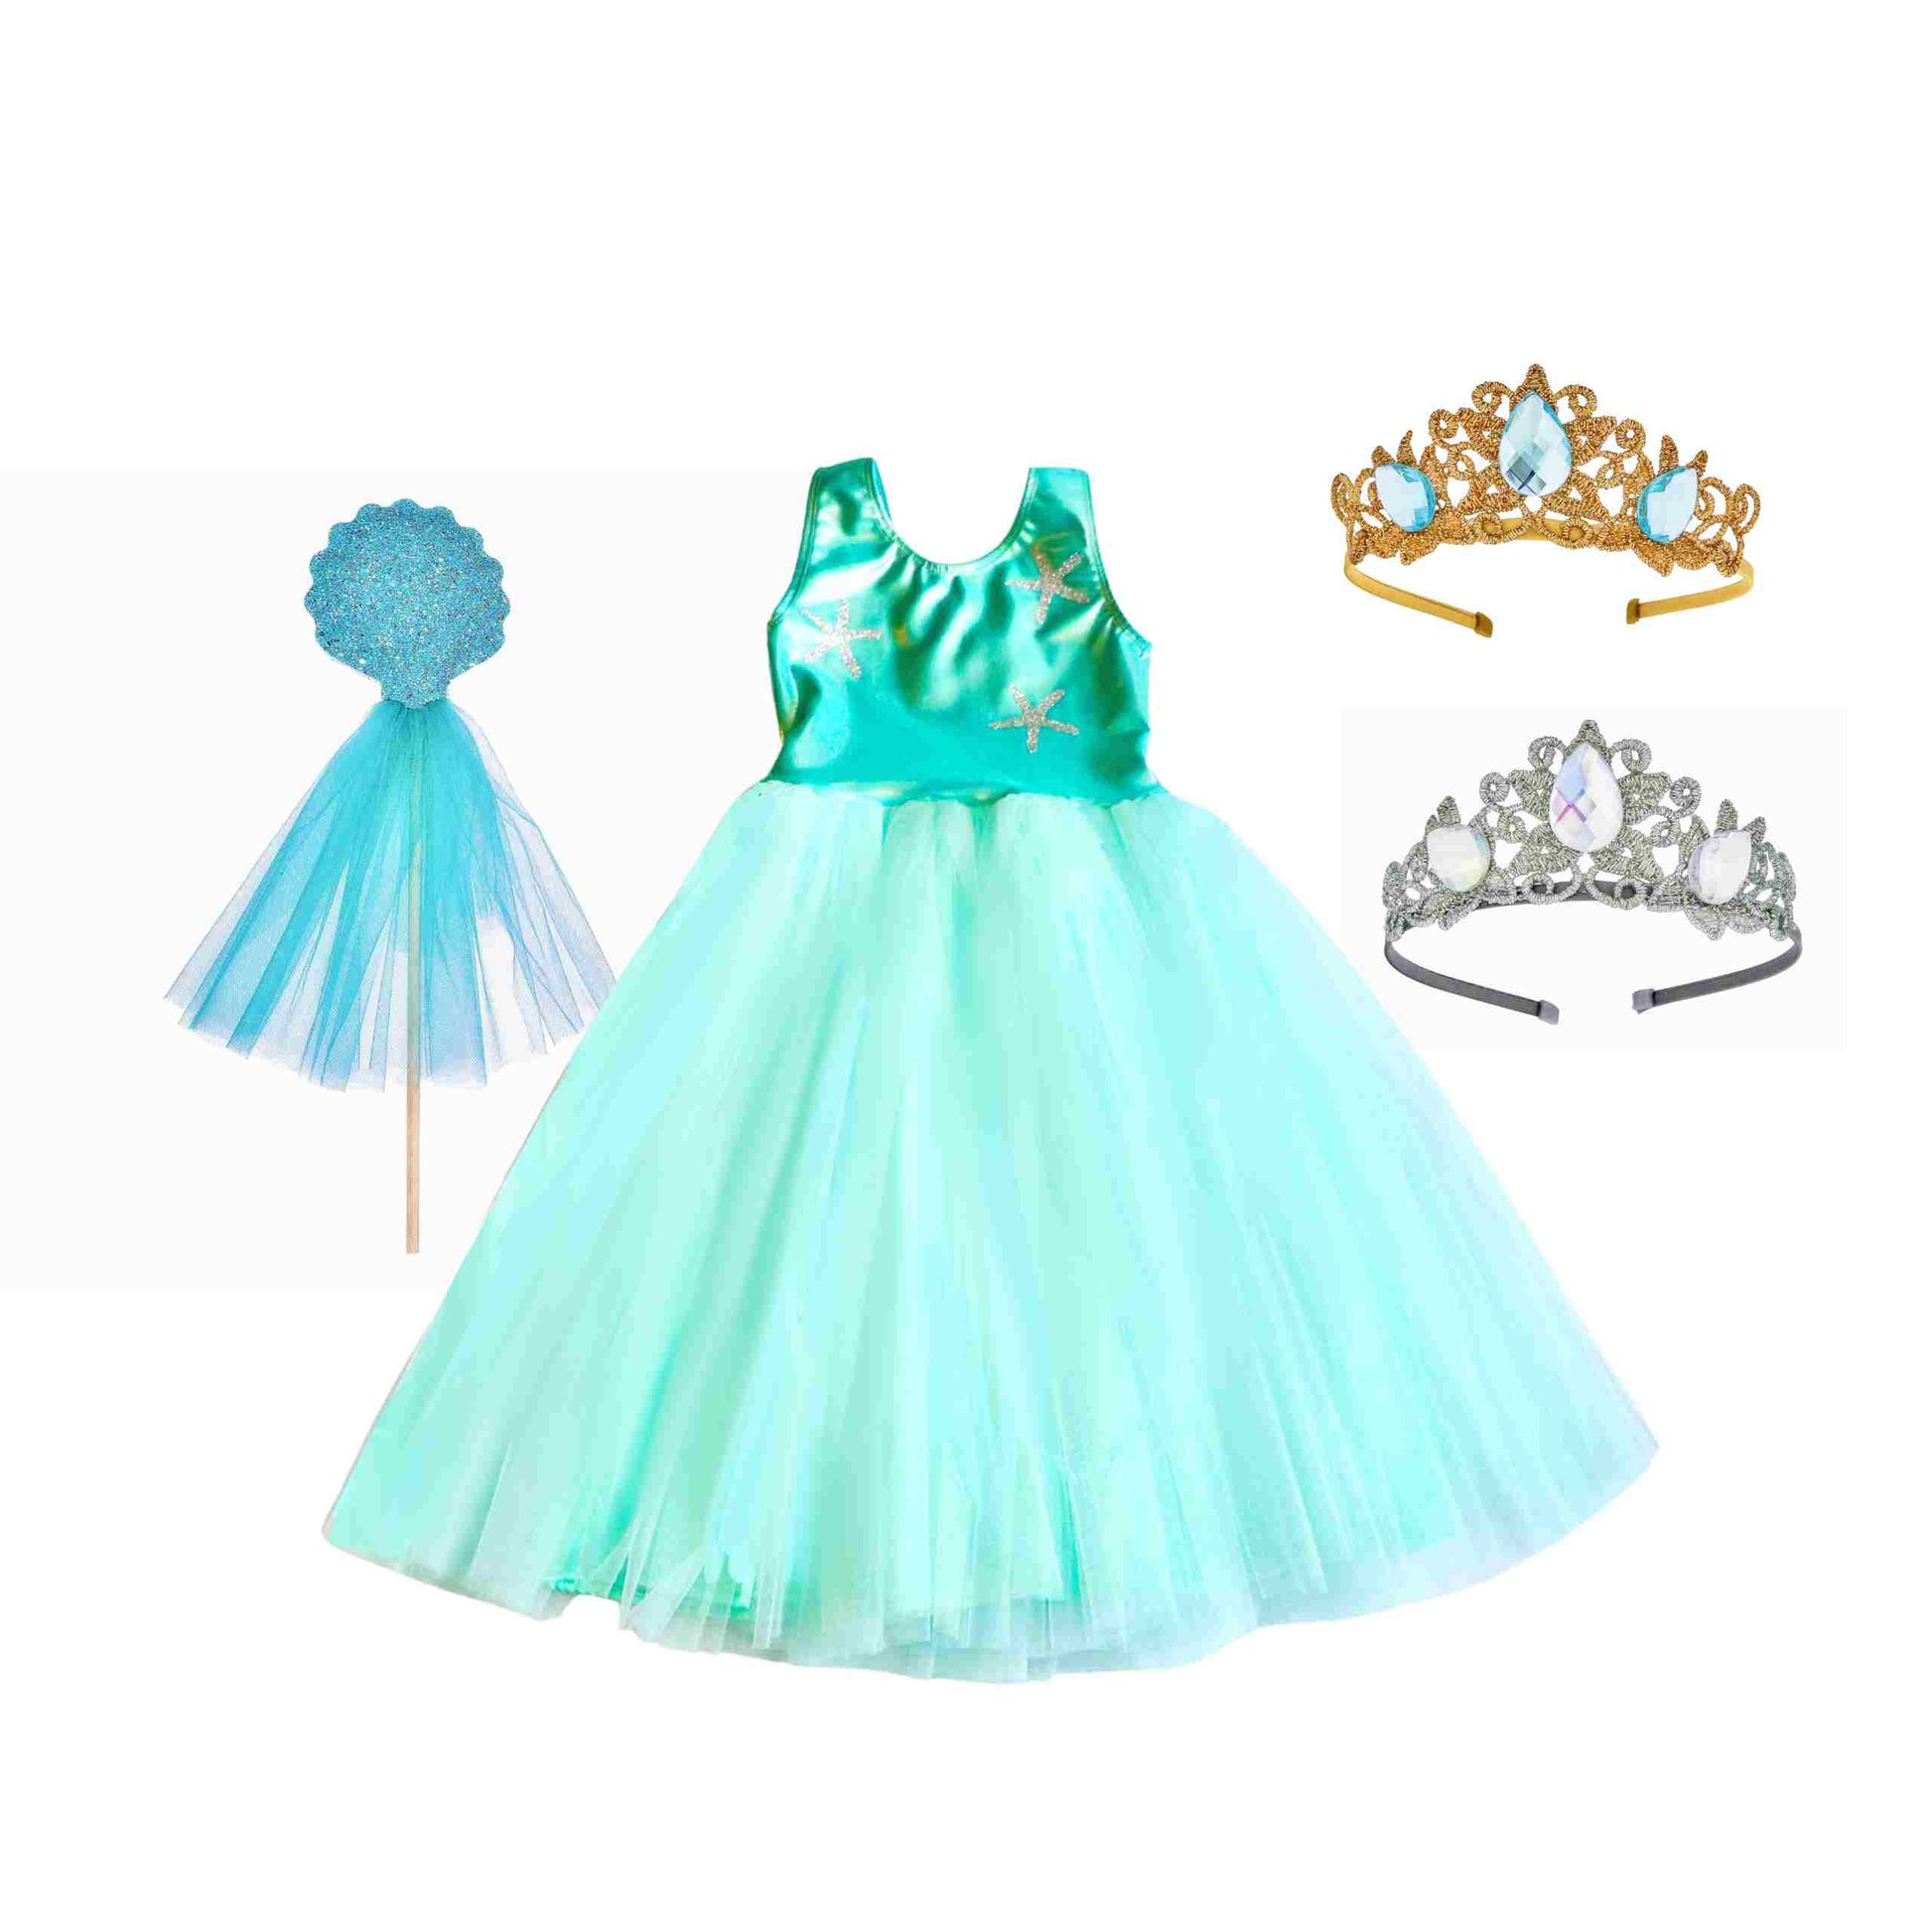 a little girl wearing a tiara and dress